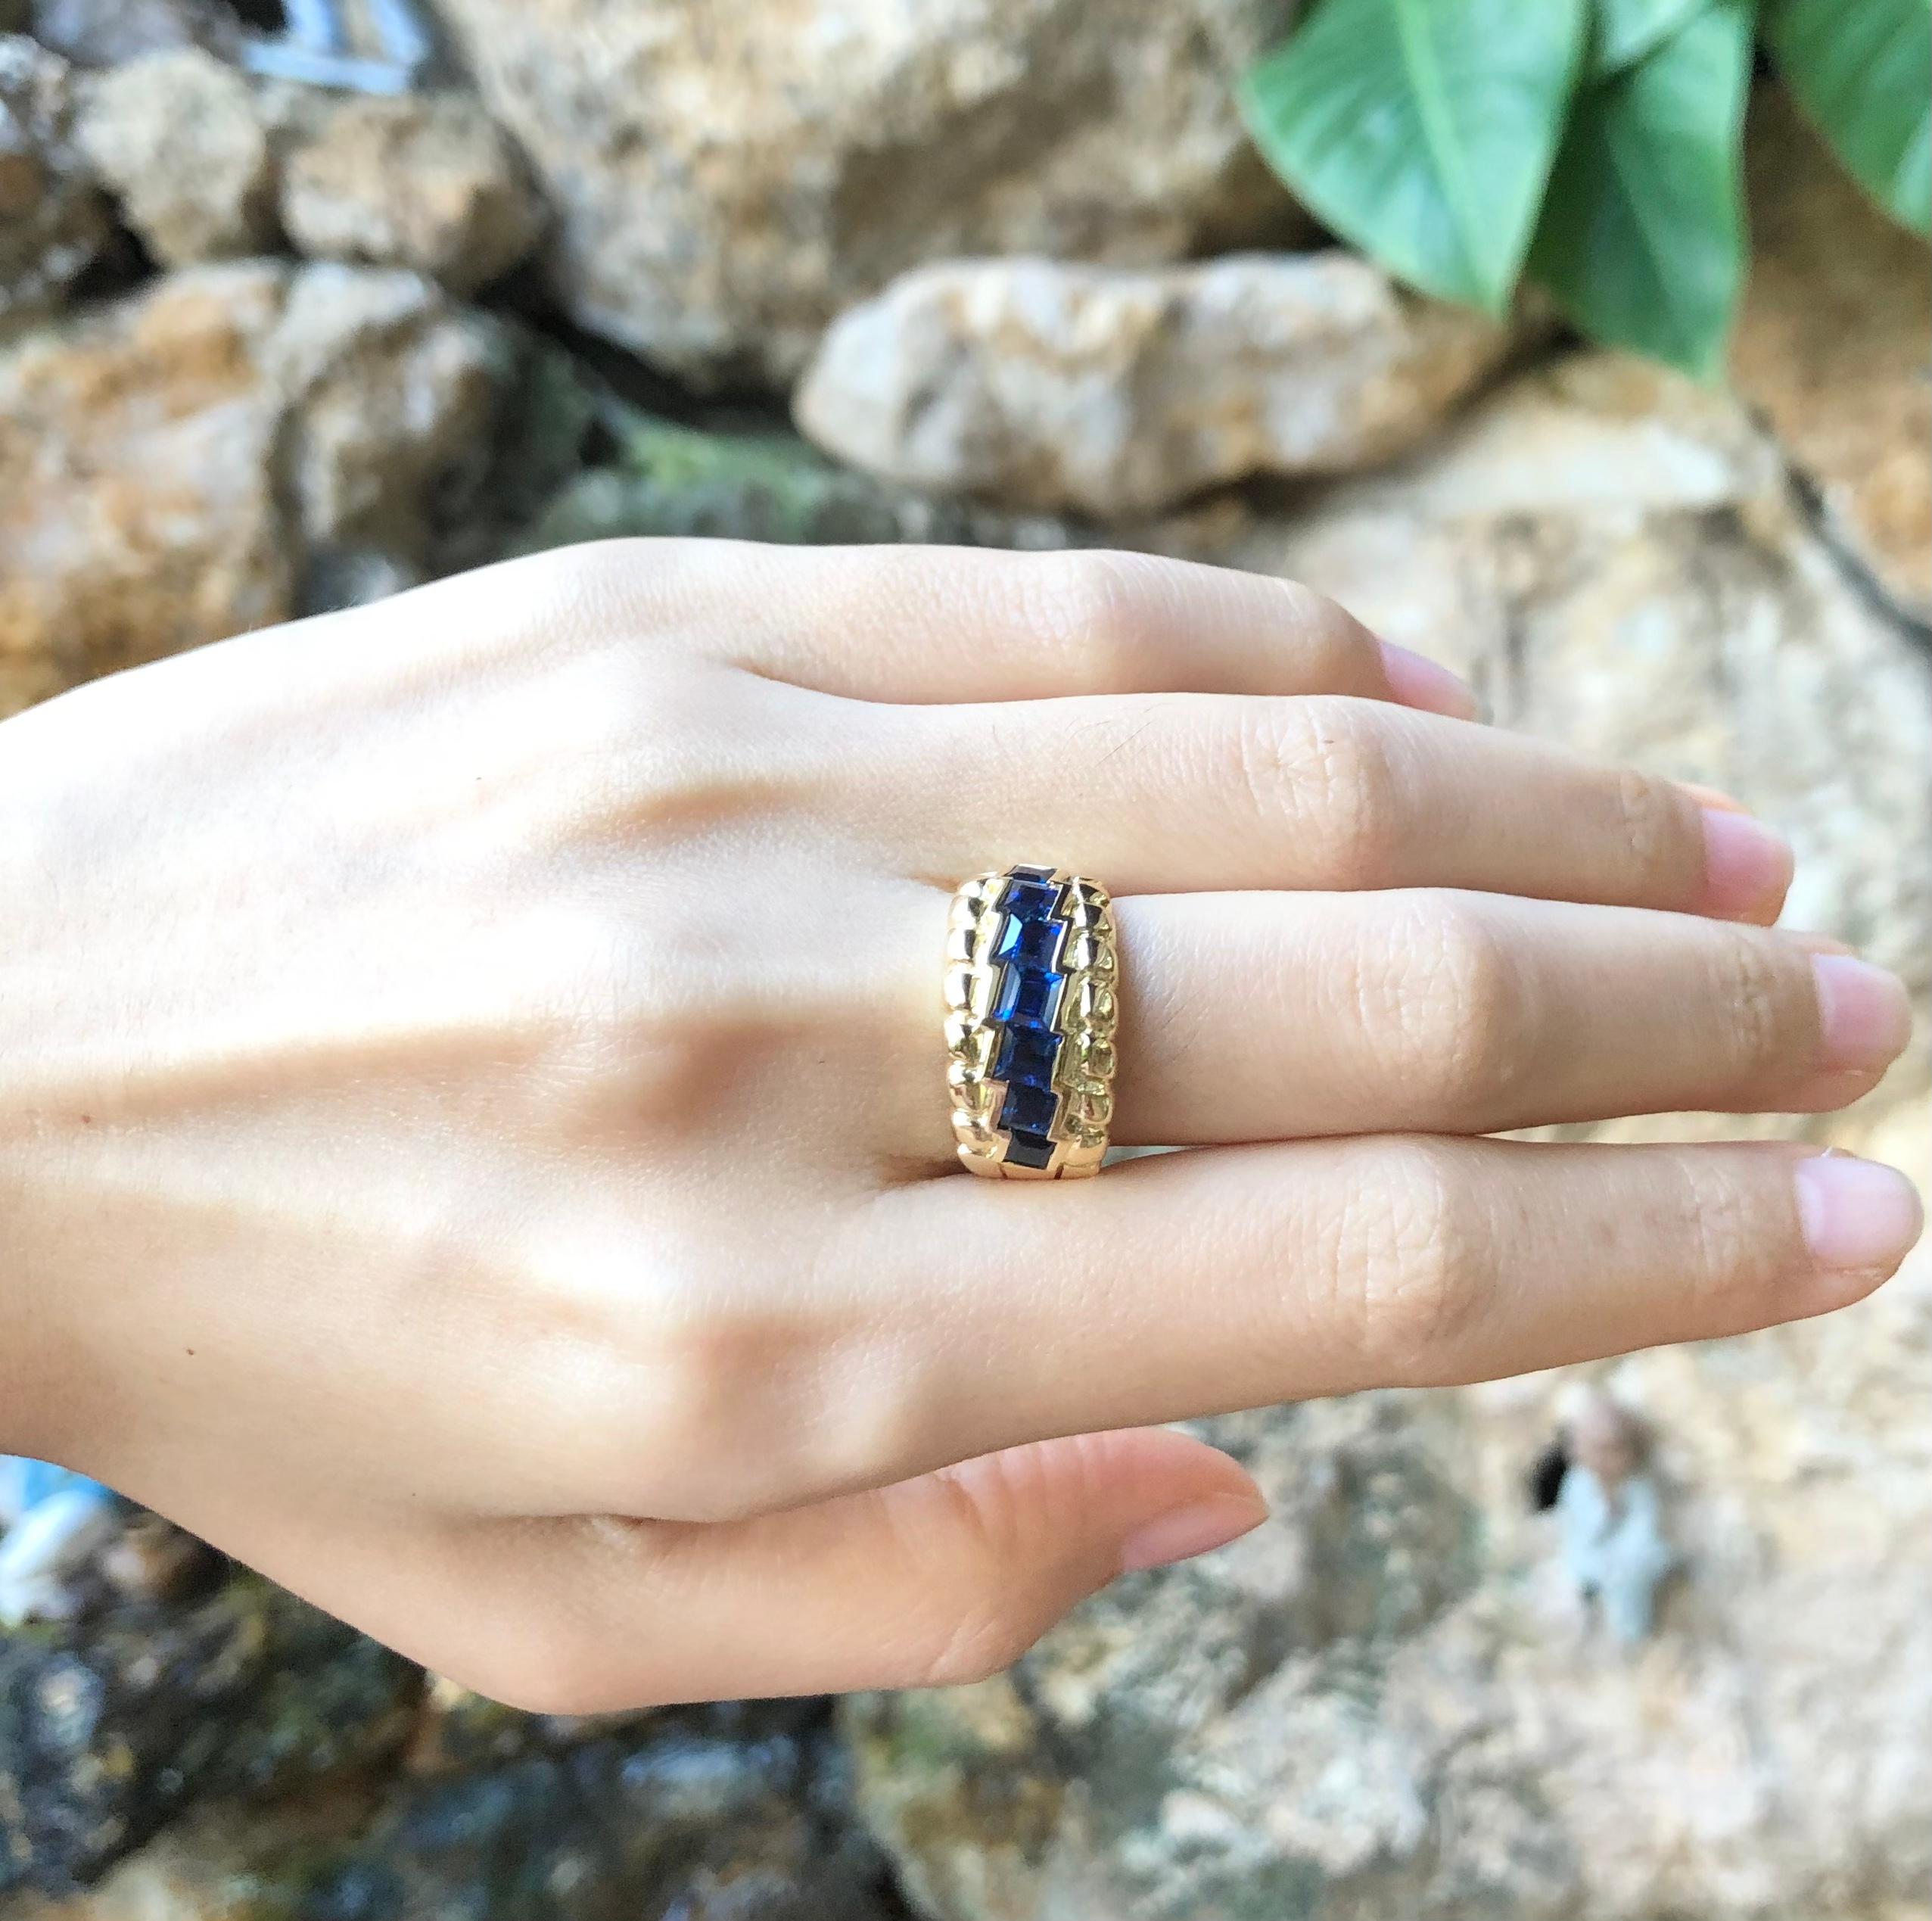 Blue Sapphire 1.0 carat Ring set in 18 Karat Gold Settings

Width:  1.9 cm 
Length: 1.0 cm
Ring Size: 54
Total Weight: 9.21 grams

